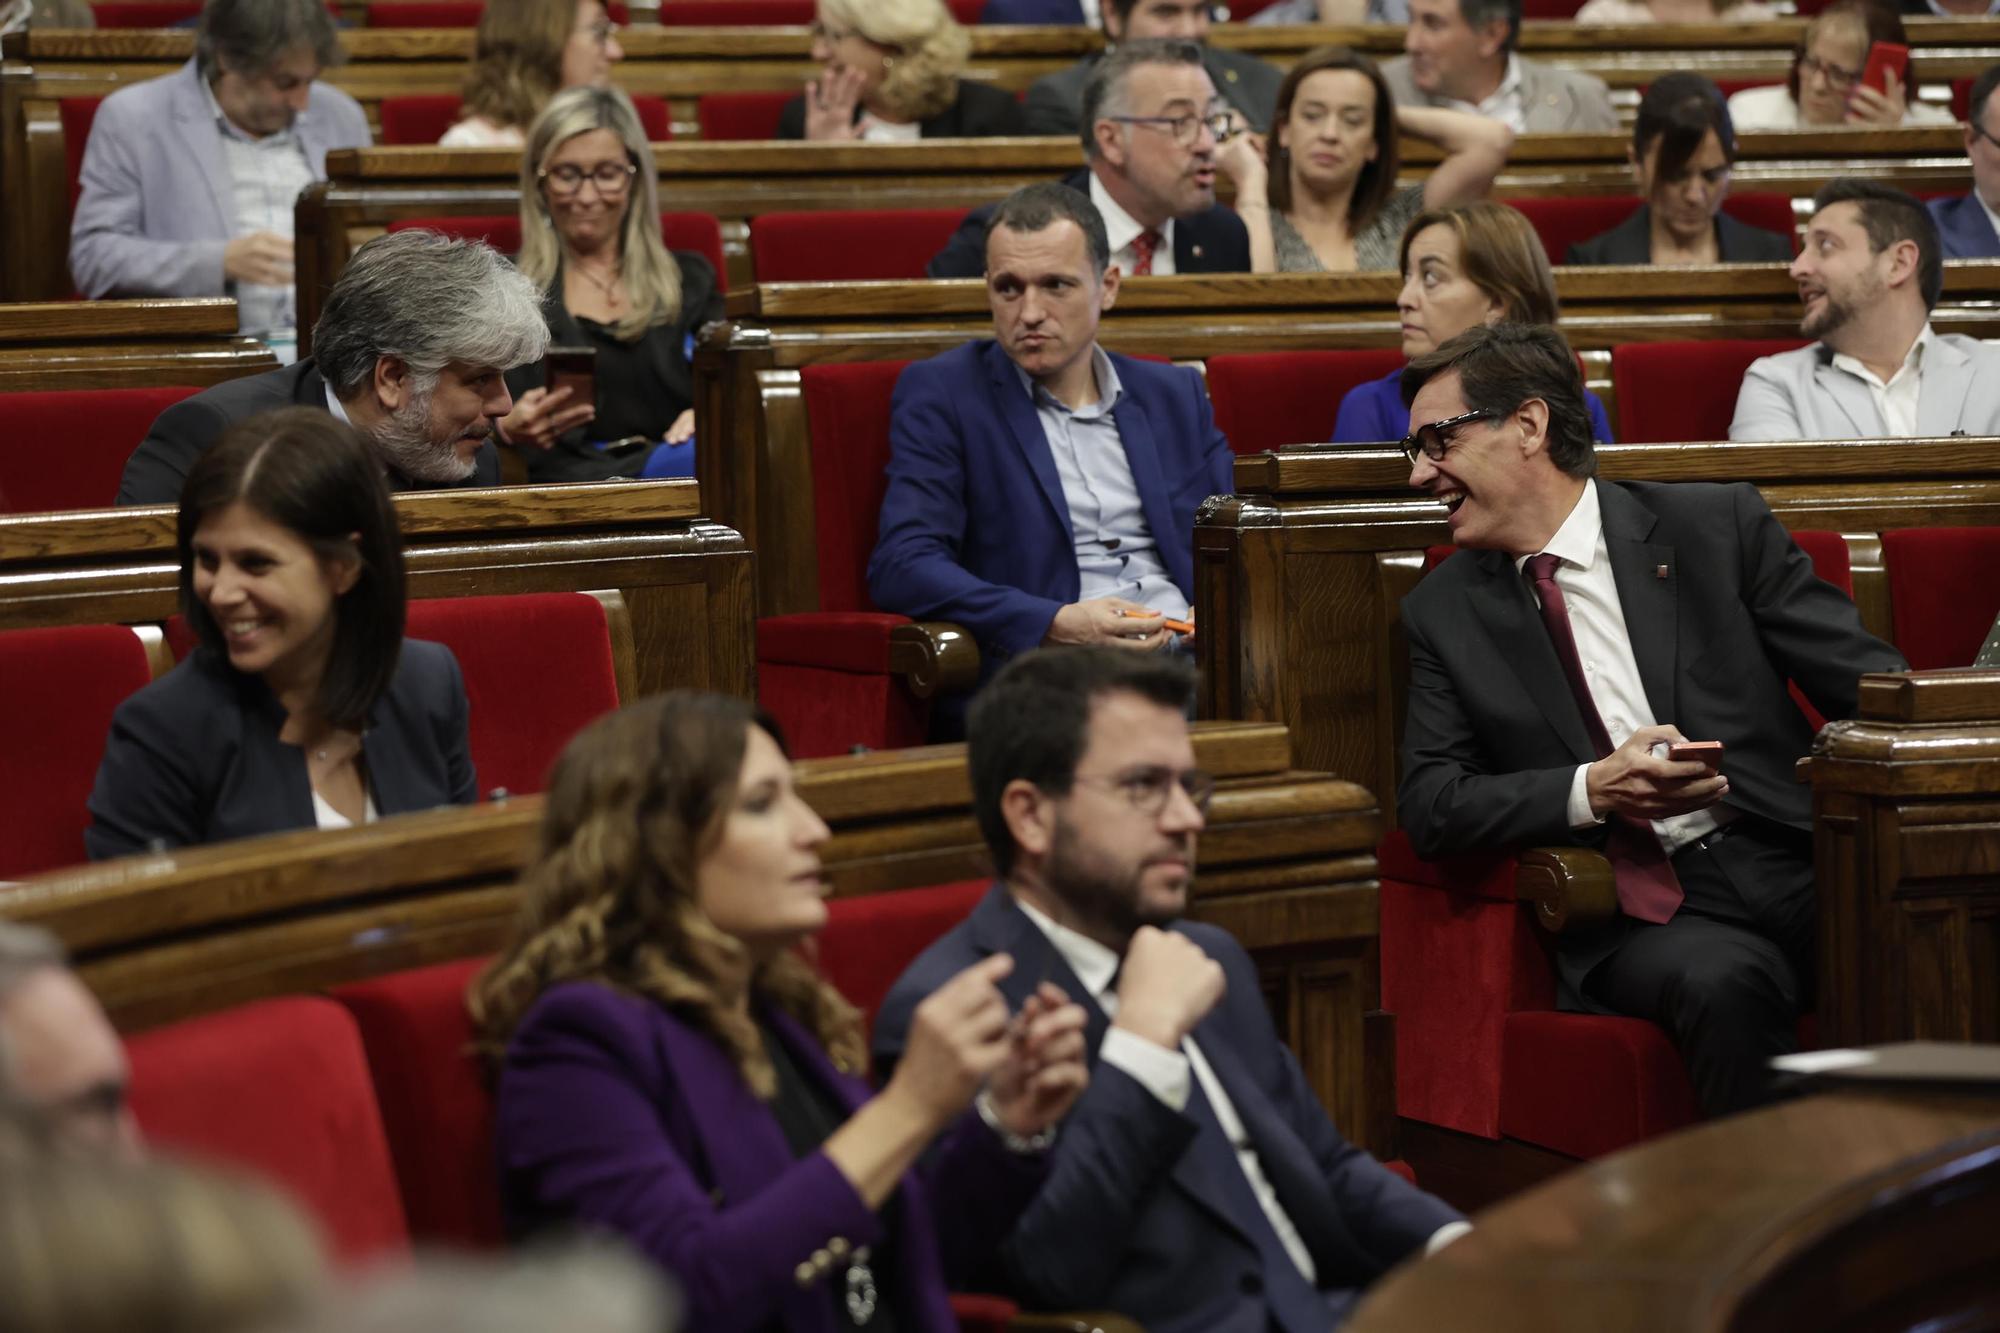 Salvador Illa y Albert Batet, conversando en el hemiciclo del Parlament justo detrás del 'president' Pere Aragonès